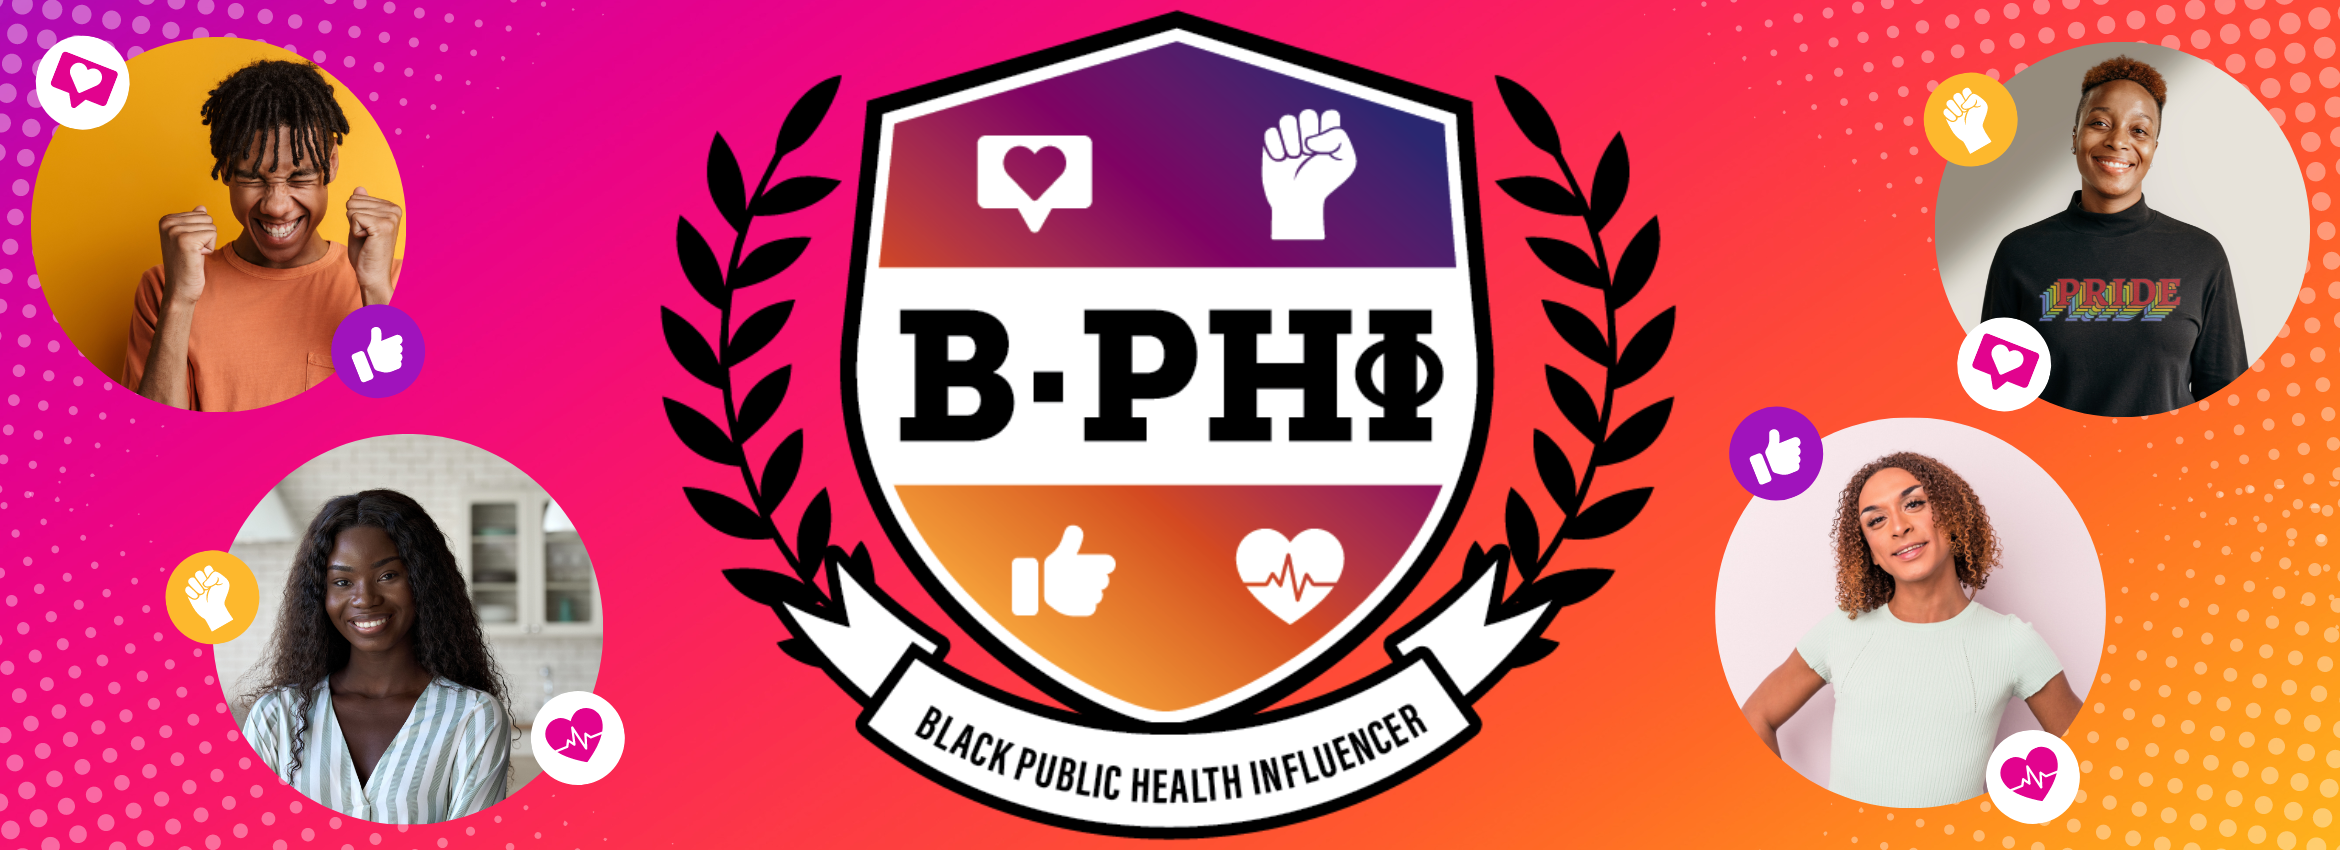 Copy of BPHI Landing Page_Header Banner (1)